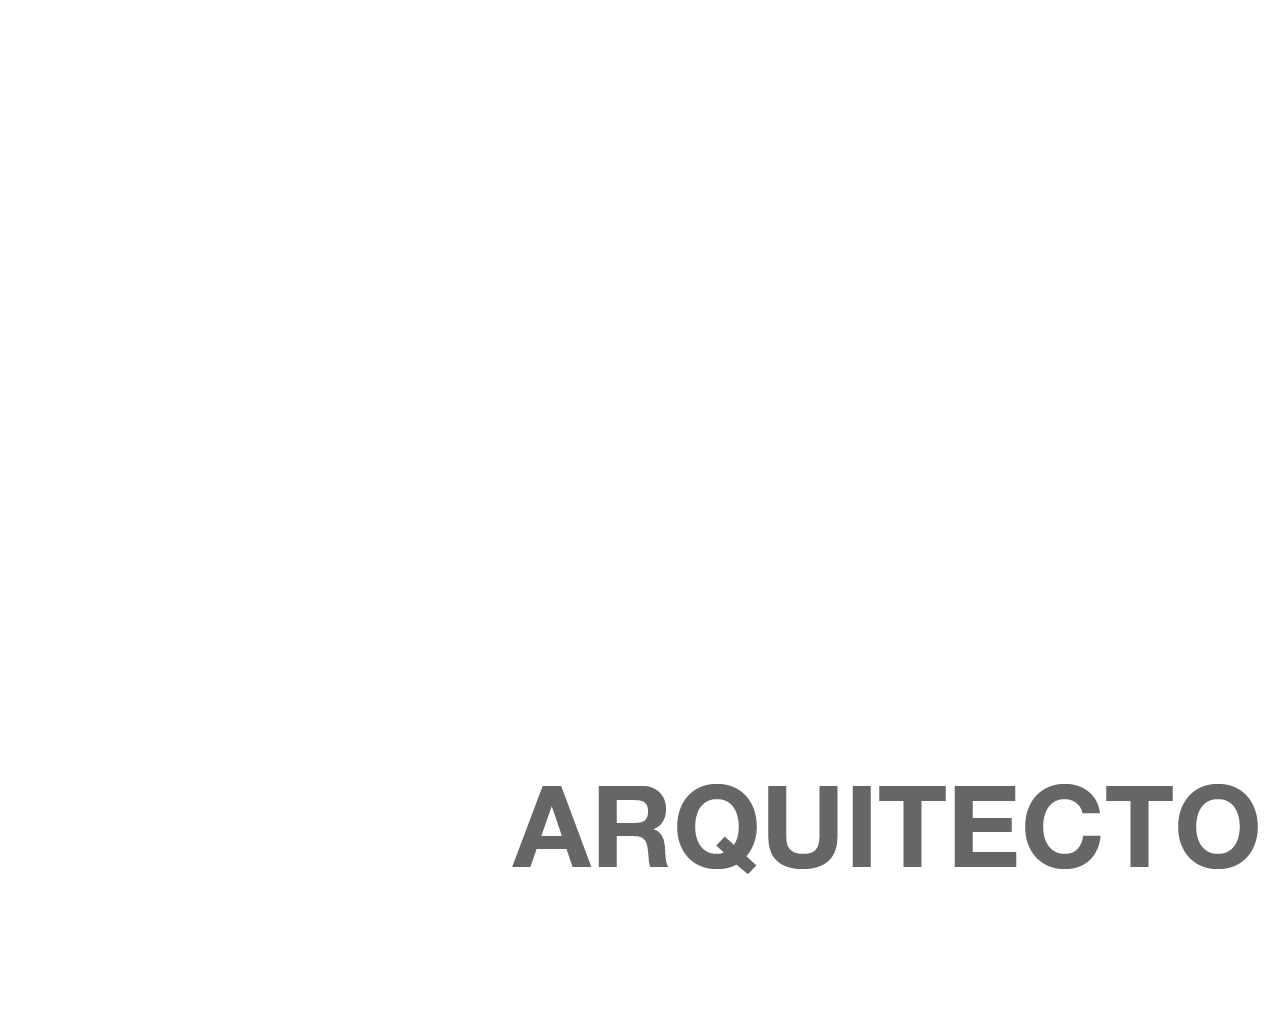 Hugo Tapia